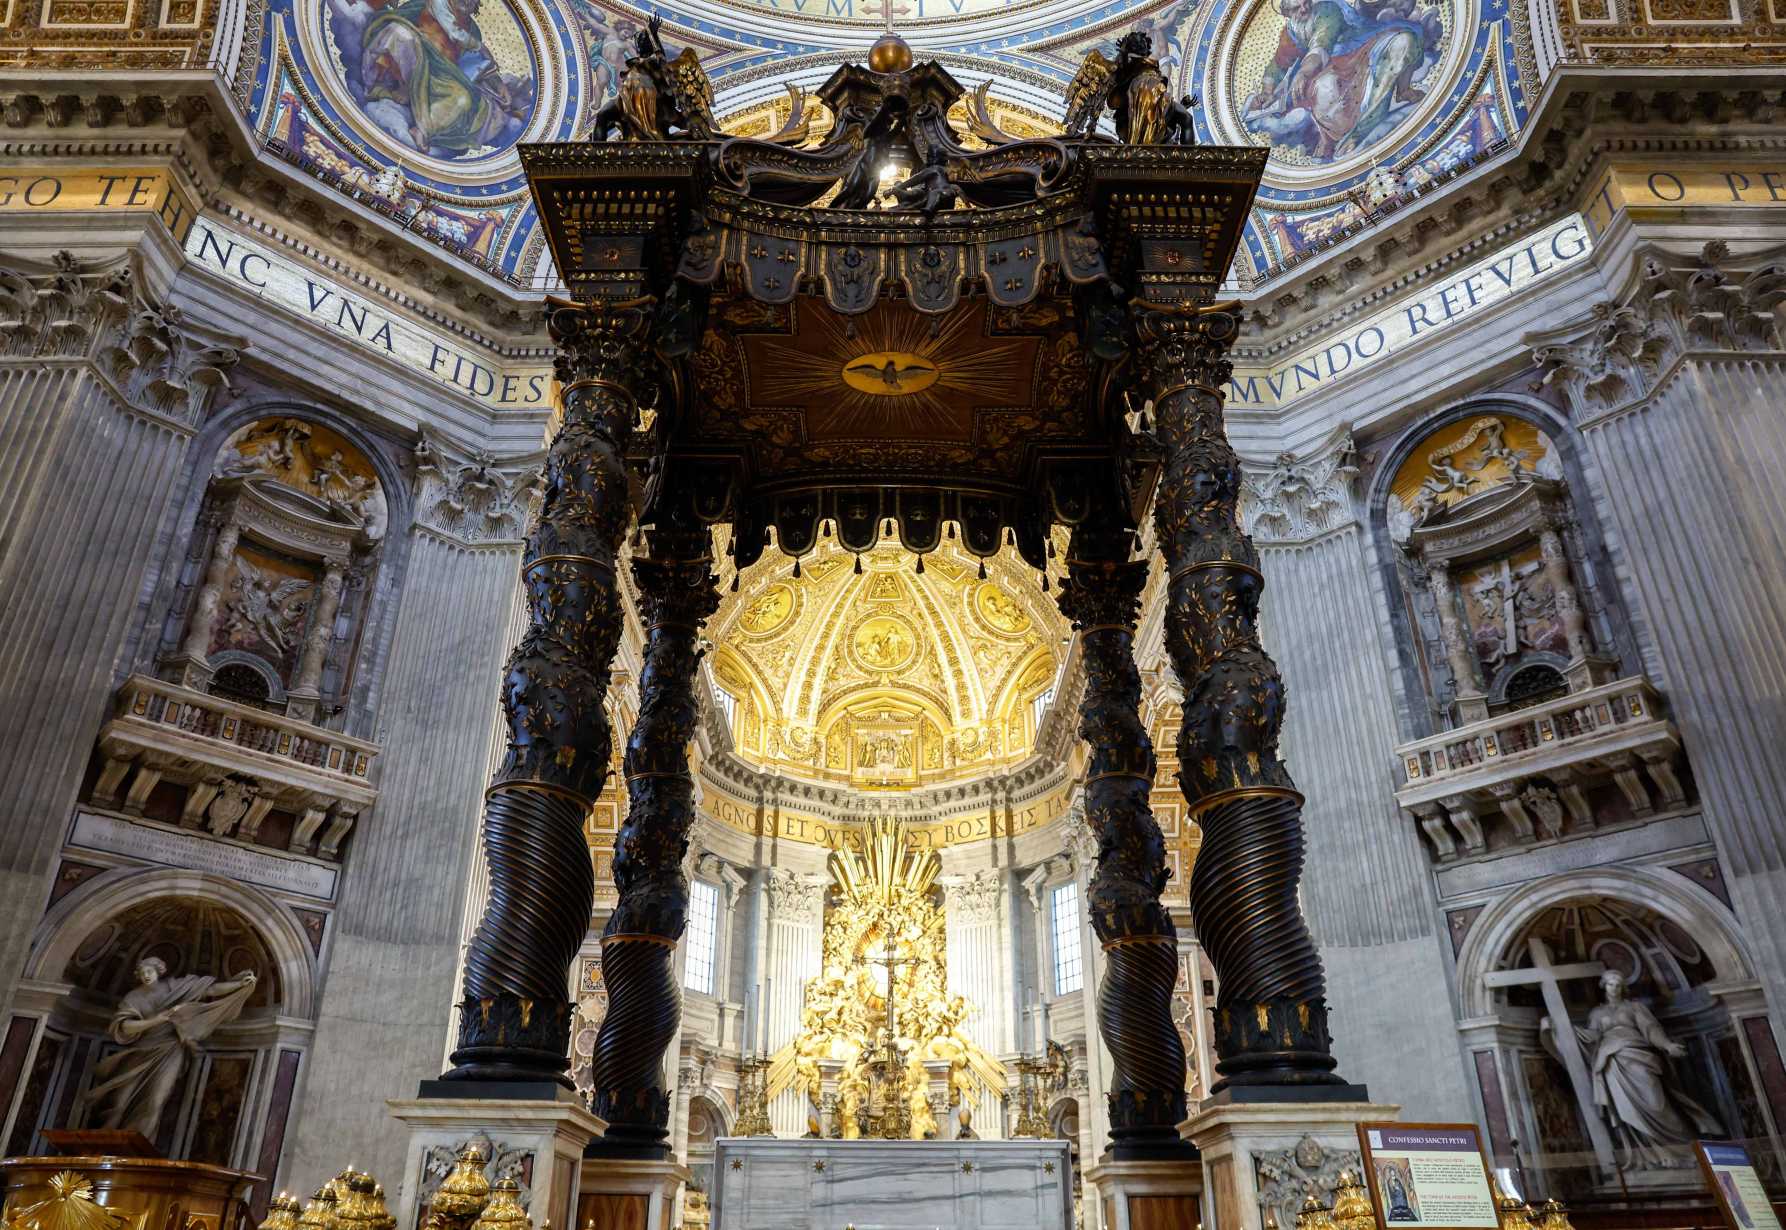 Canopy over main altar of St. Peter's Basilica to undergo restoration